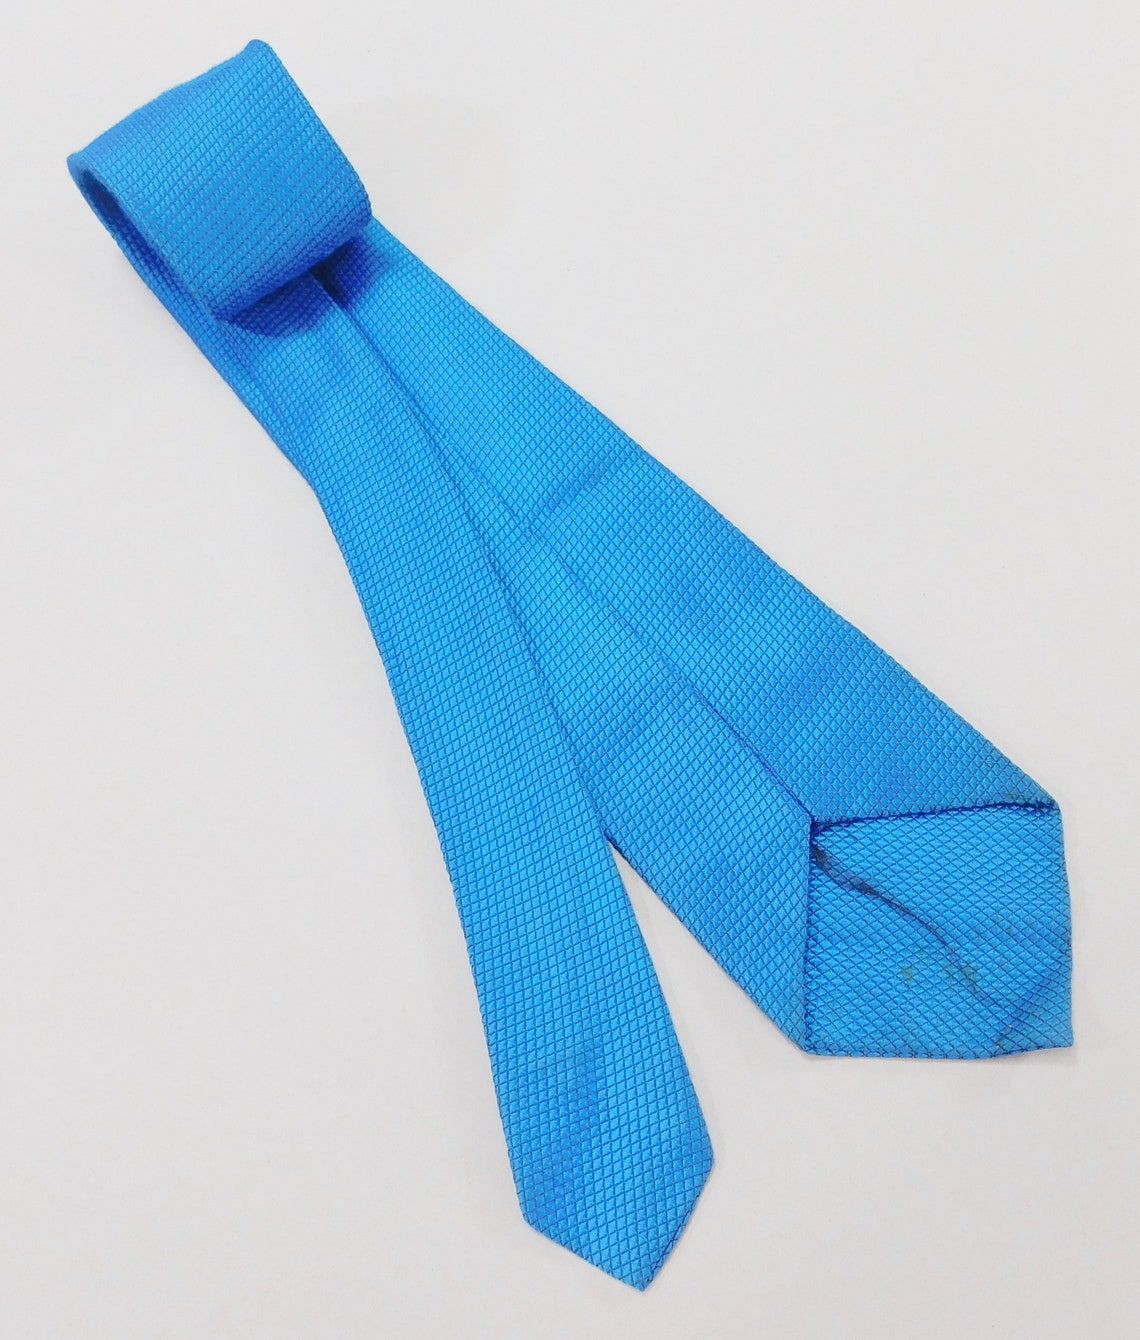 Vintage Skinny Tie / Vintage 1950s Necktie / Acetate & Rayon - Etsy